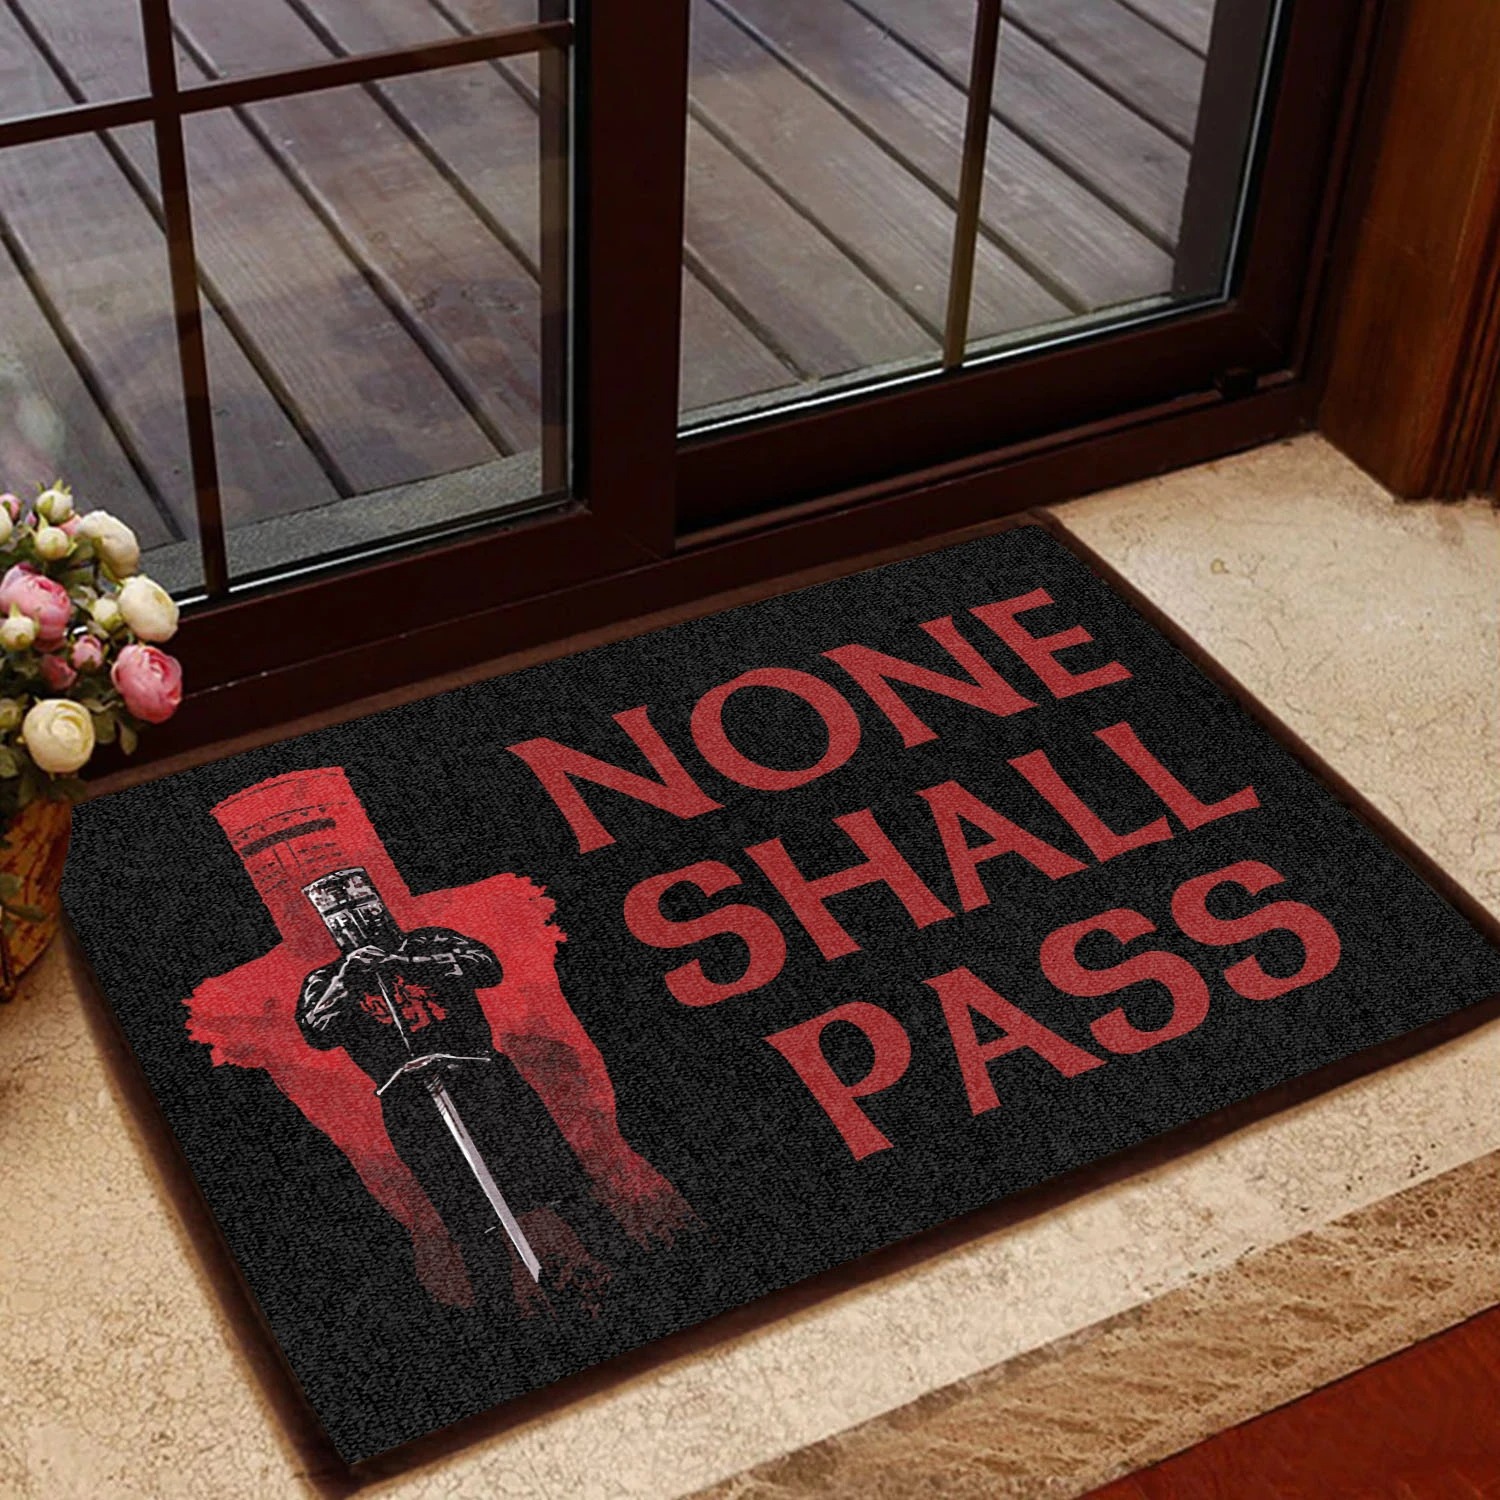 None shall pass doormat